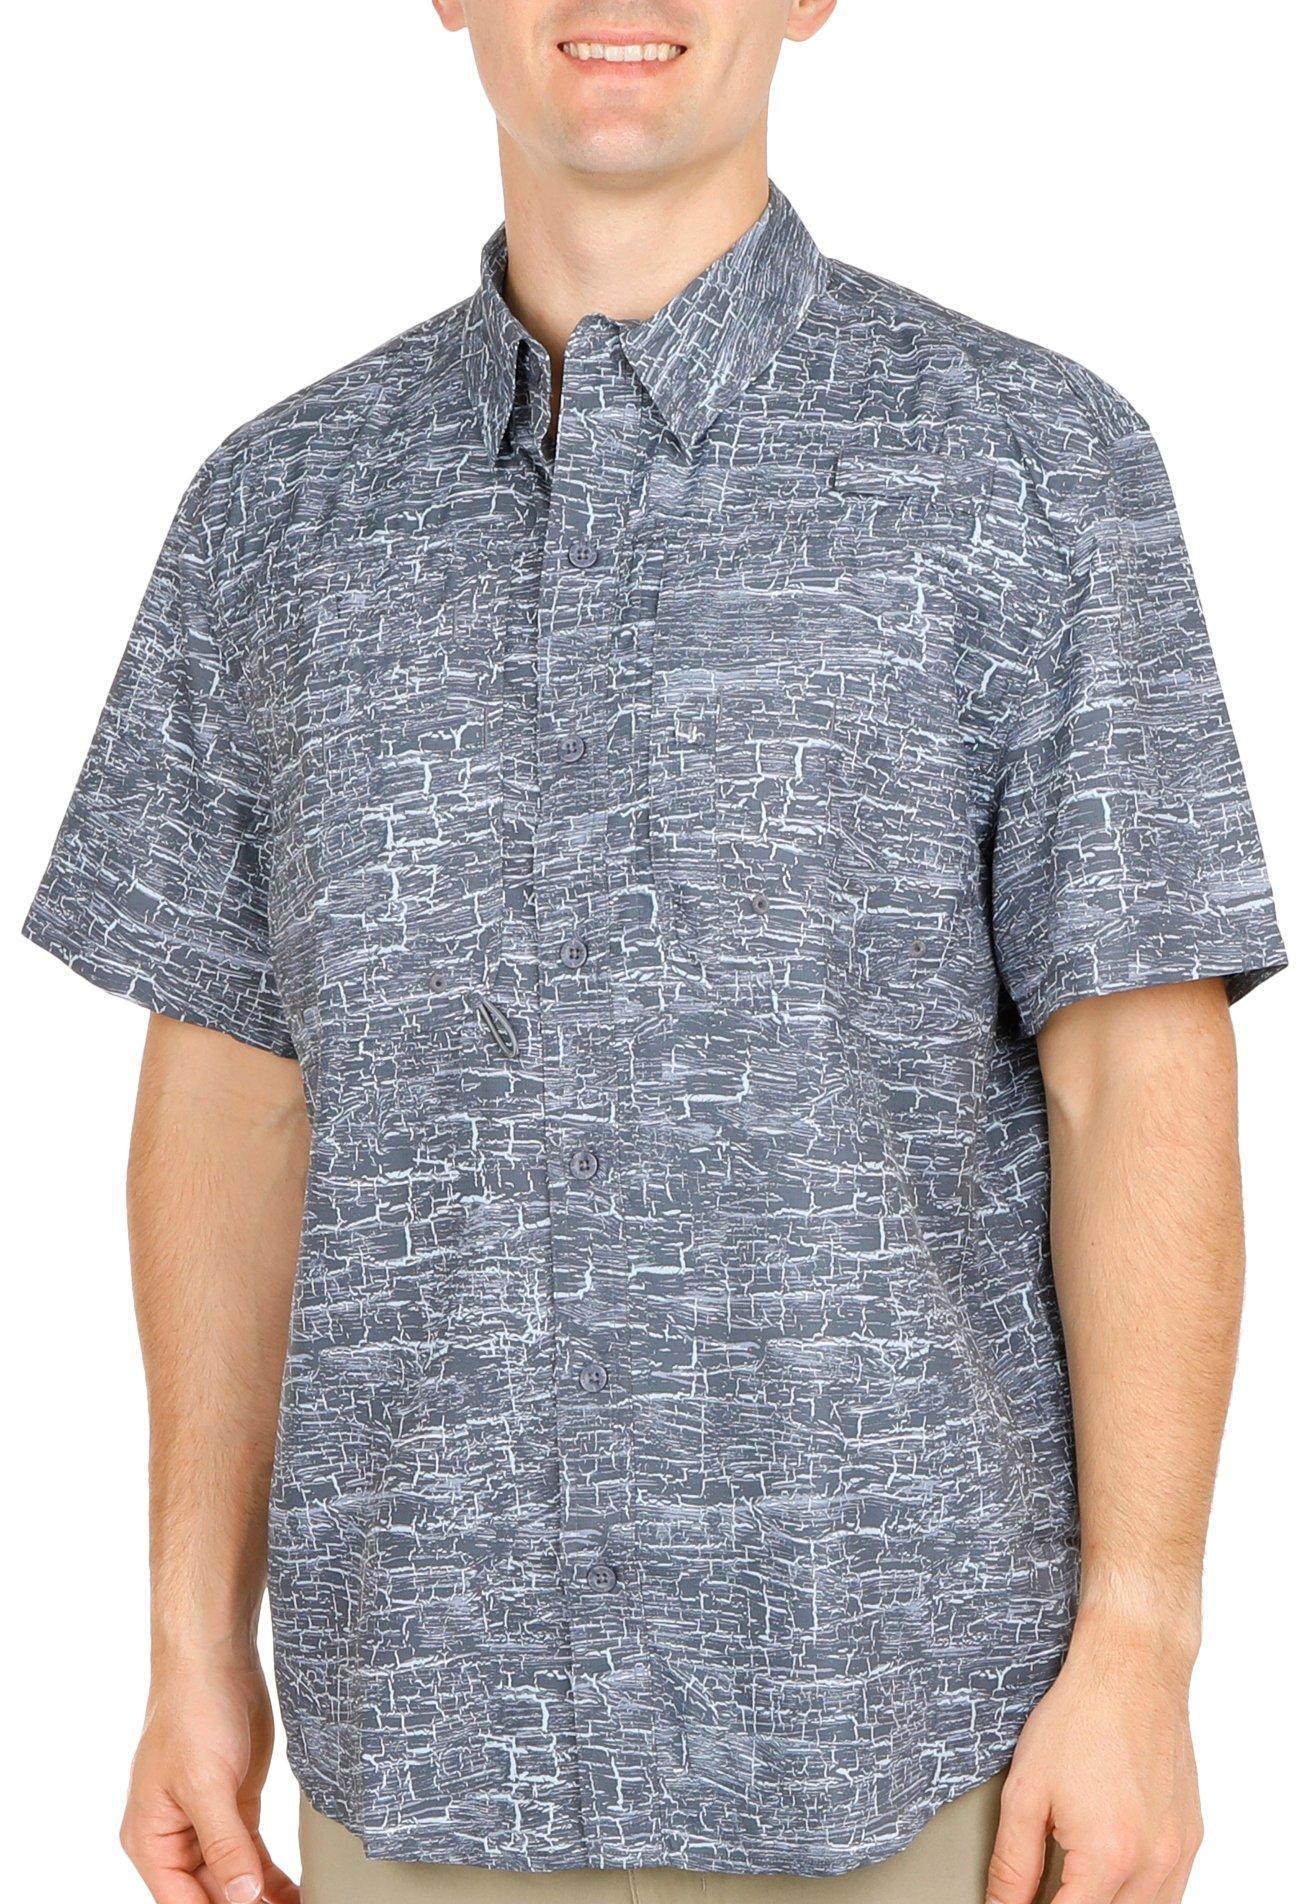 Reel Legends Button Front Short Sleeve Multi Pocket Camo Fishing Shirt  Men's XL